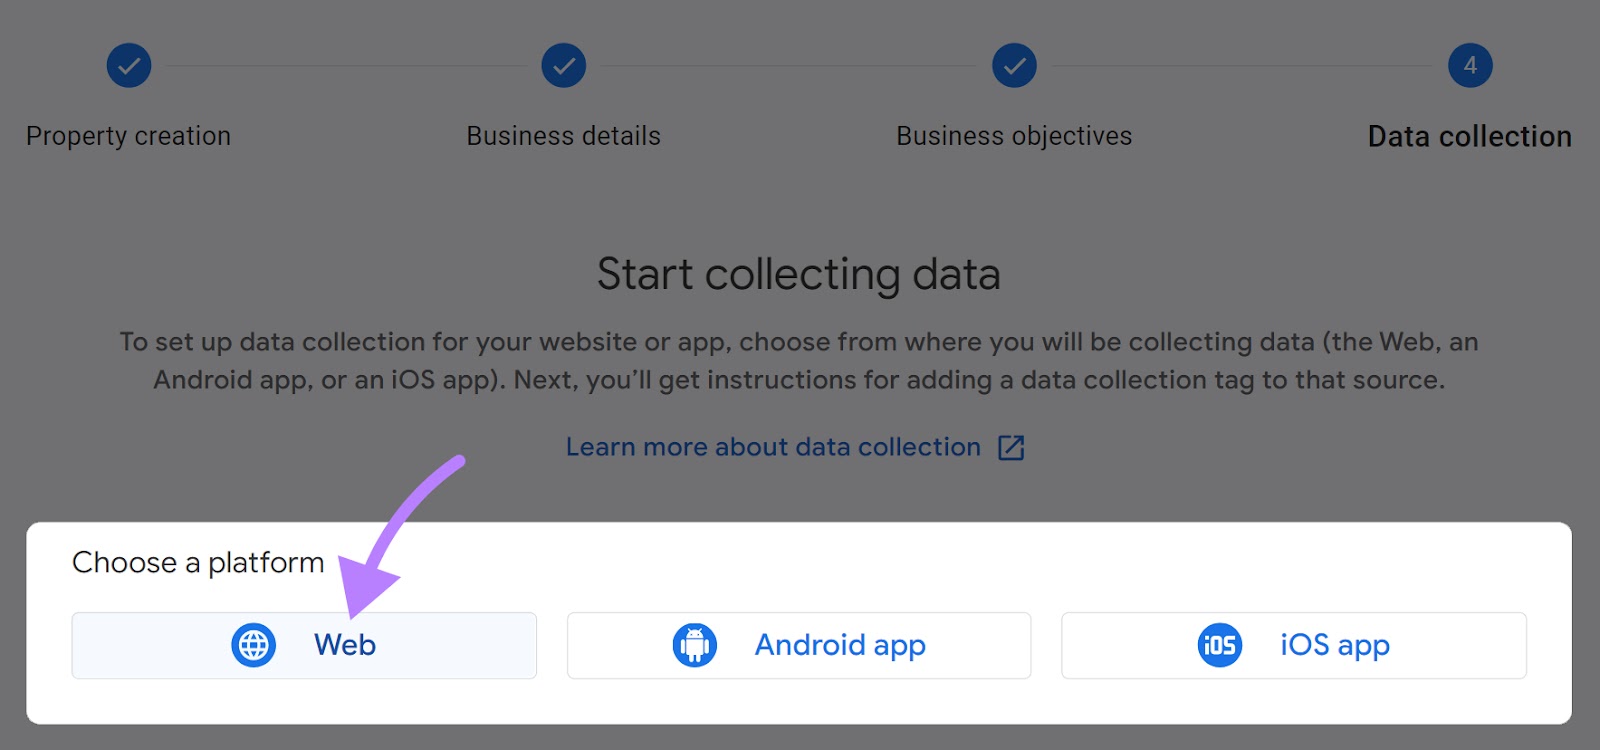 "Web" selected under "Choose a platform" section